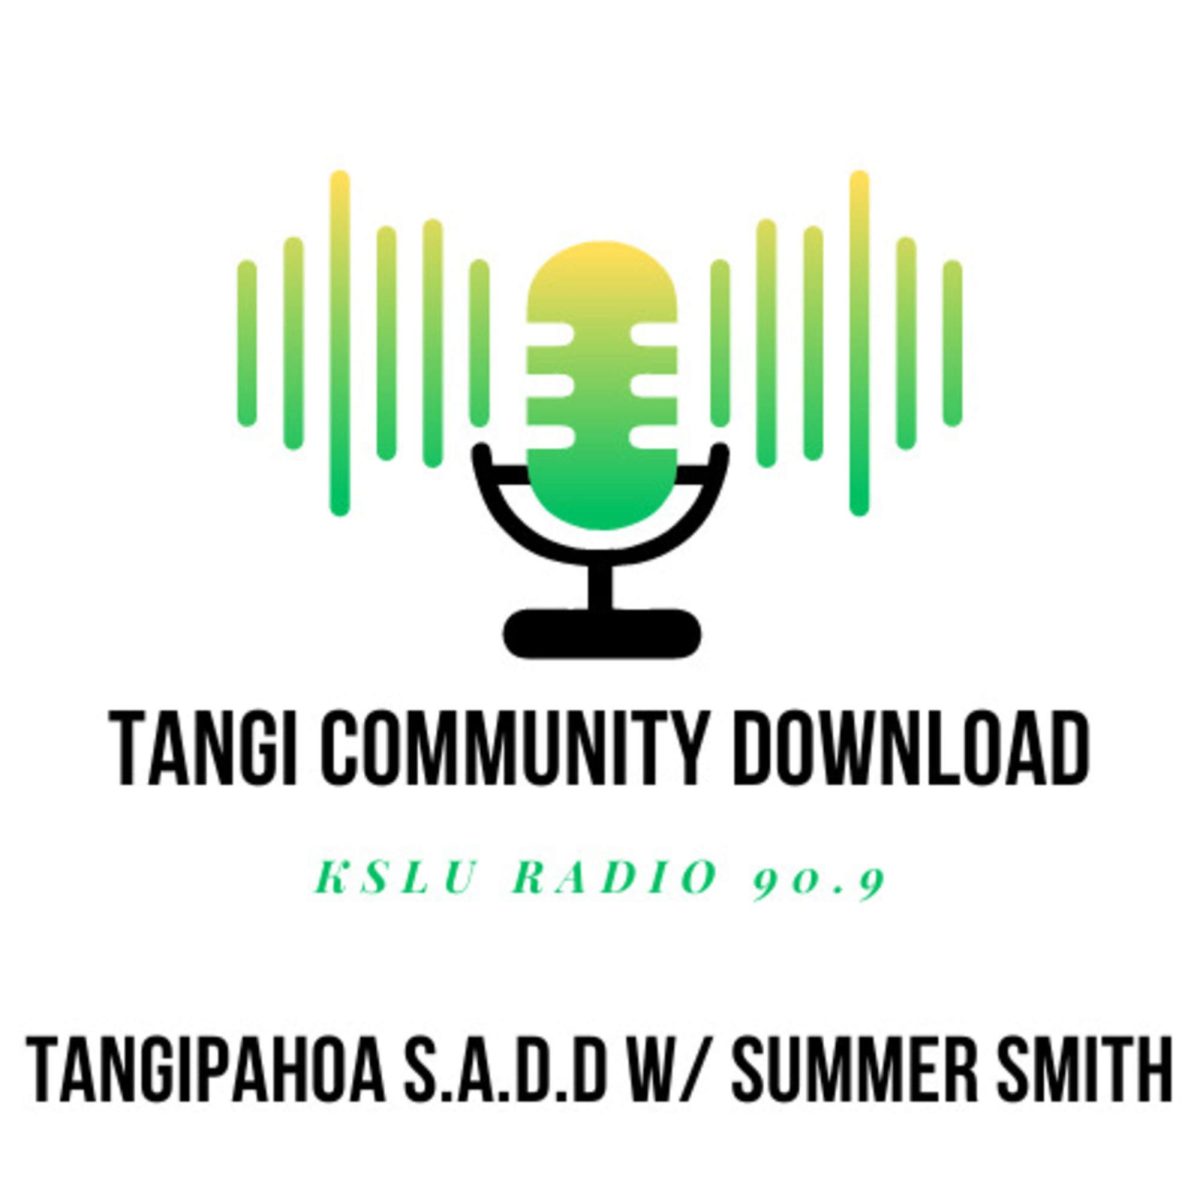 1: Episode One: Summer Smith w/ Tangipahoa S.A.D.D